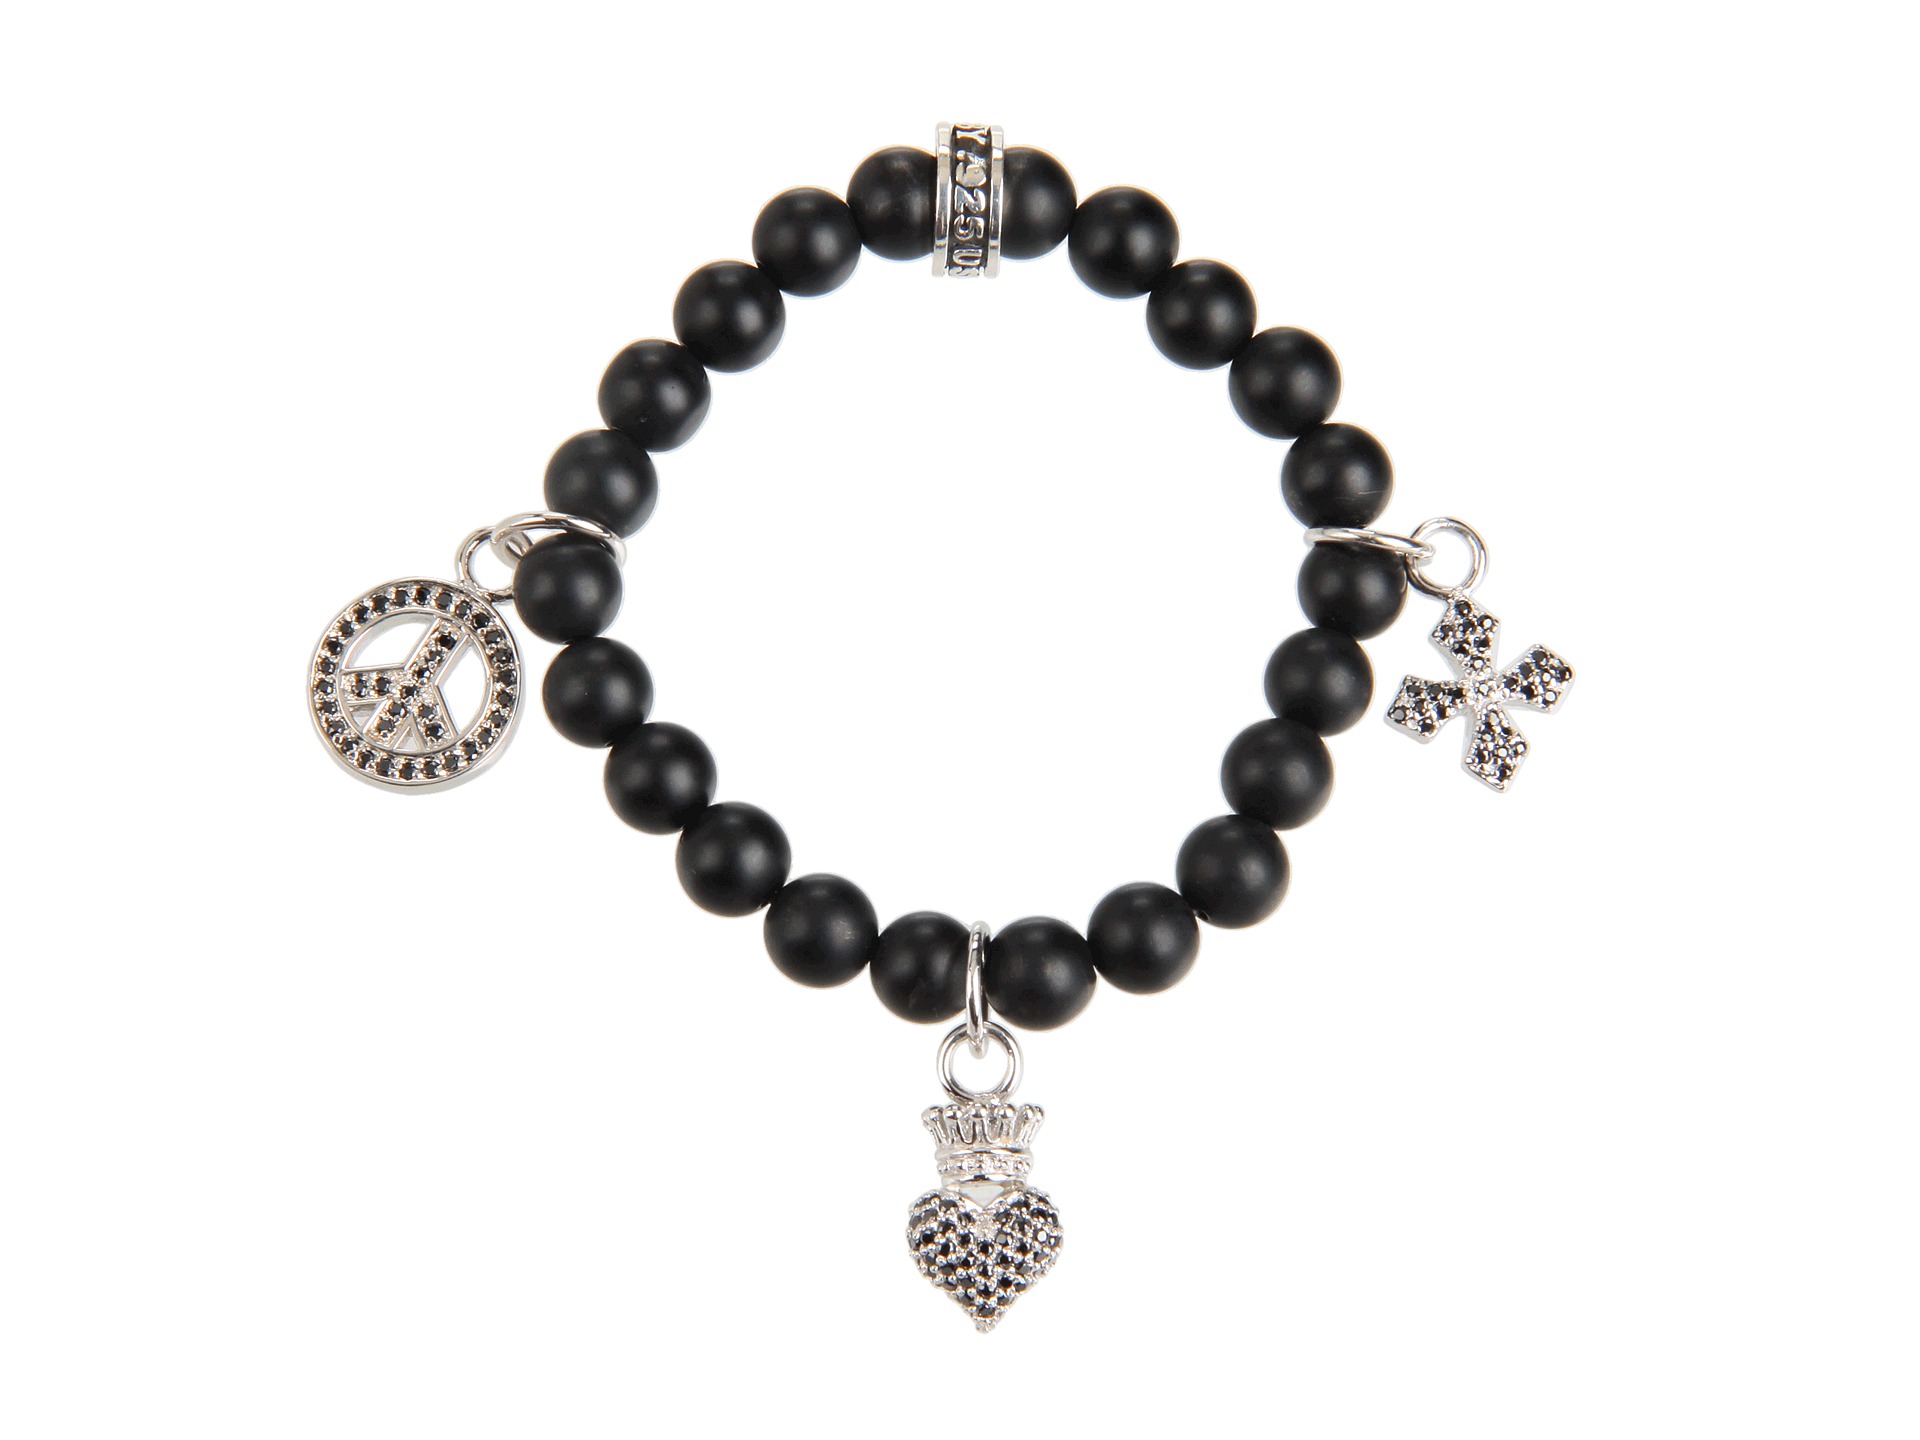 Black Onyx Bead Bracelet with Motifs Posted 10/14/11